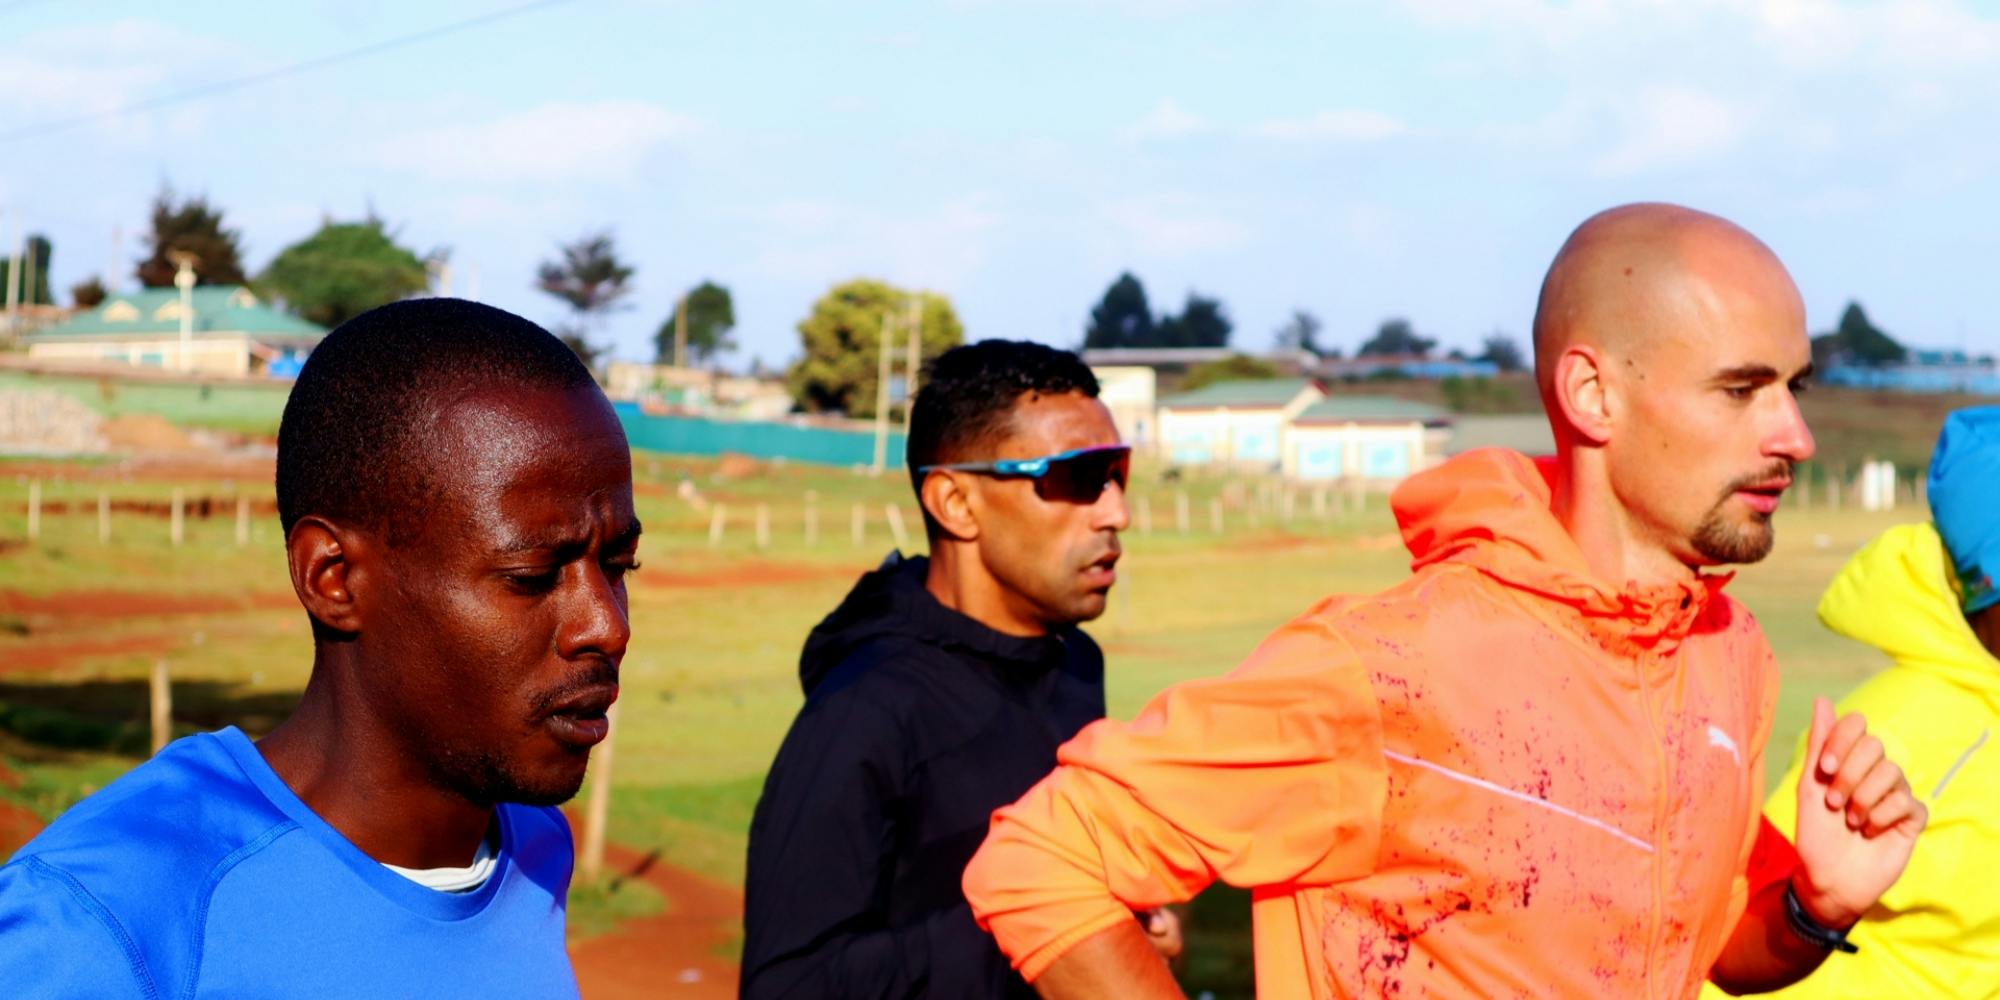 Kenya’s Report: Το Runbeat στην προετοιμασία του Hendrik Pfeiffer για τους Ολυμπιακούς Αγώνες